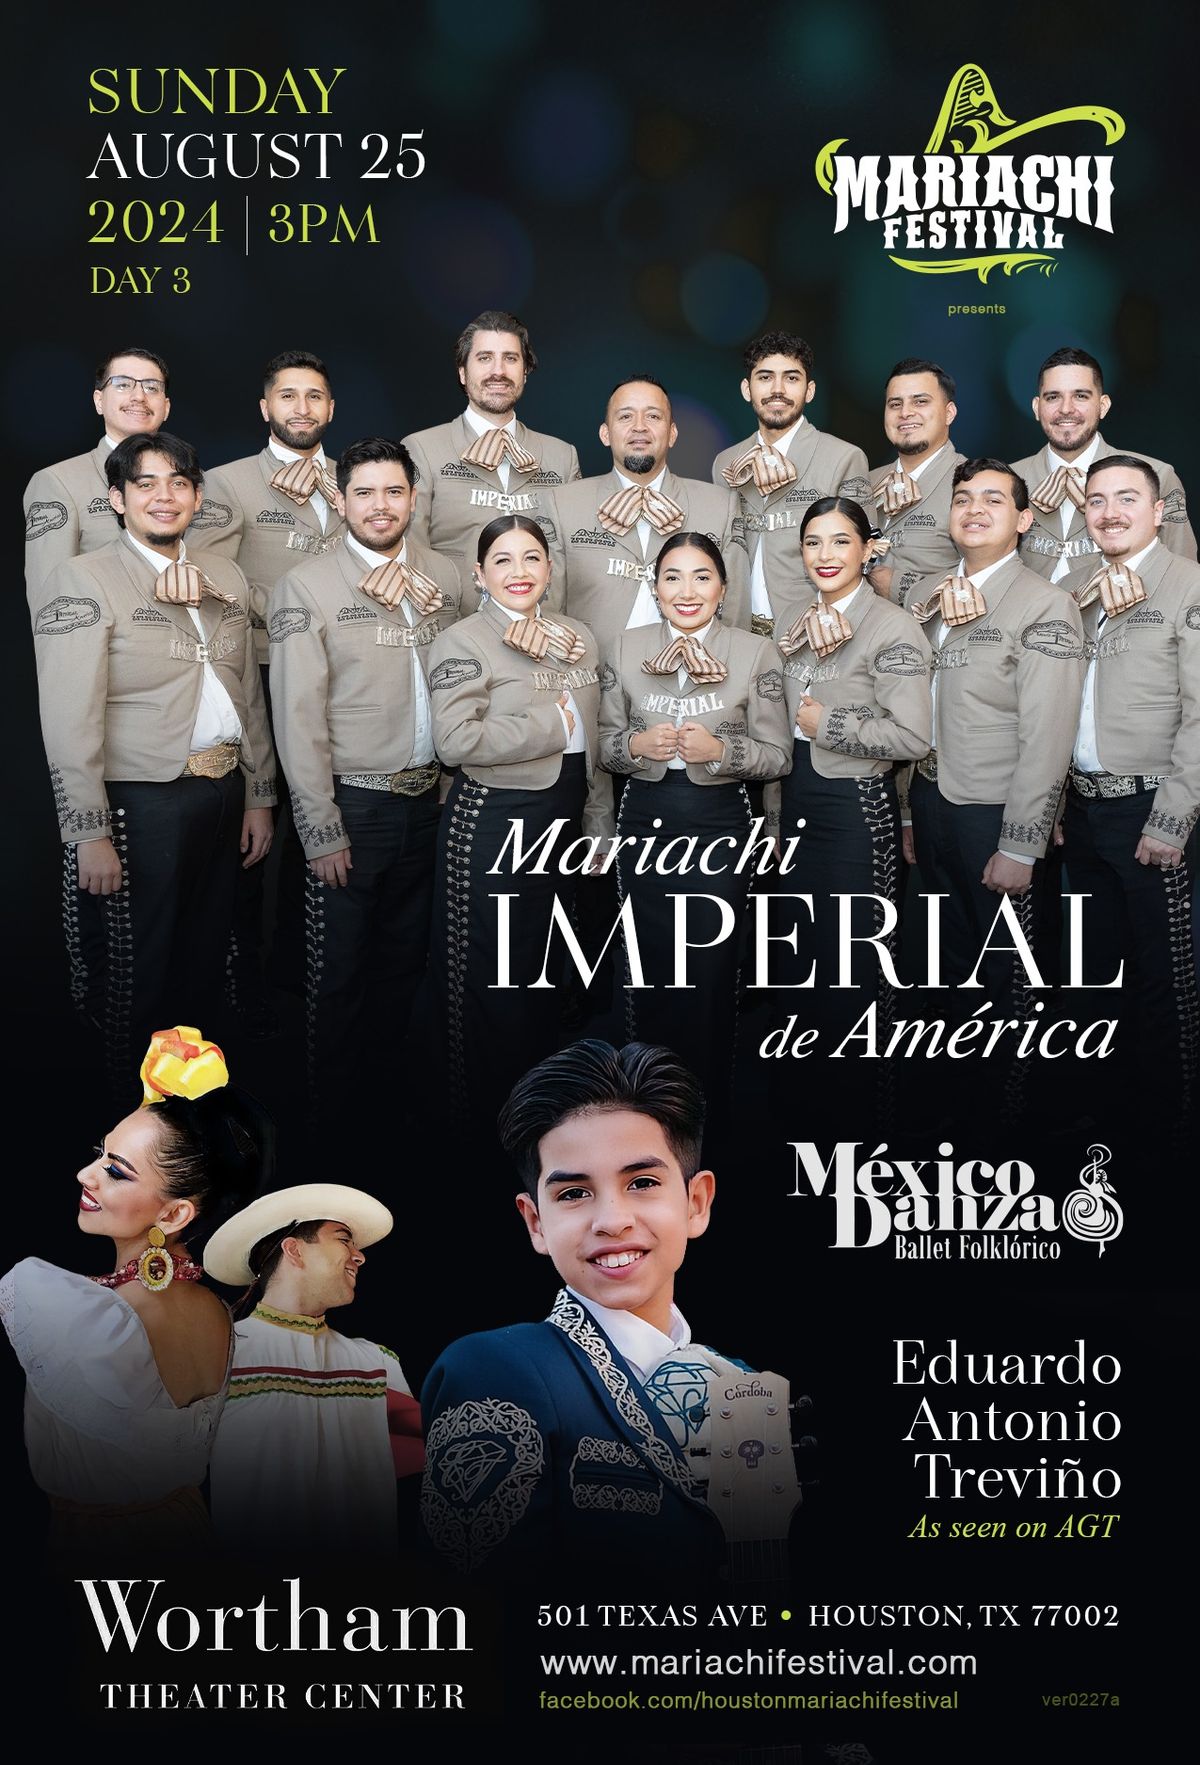 5th Annual Mariachi Festival - Mariachi Imperial de America & Eduardo Antonio Trevino